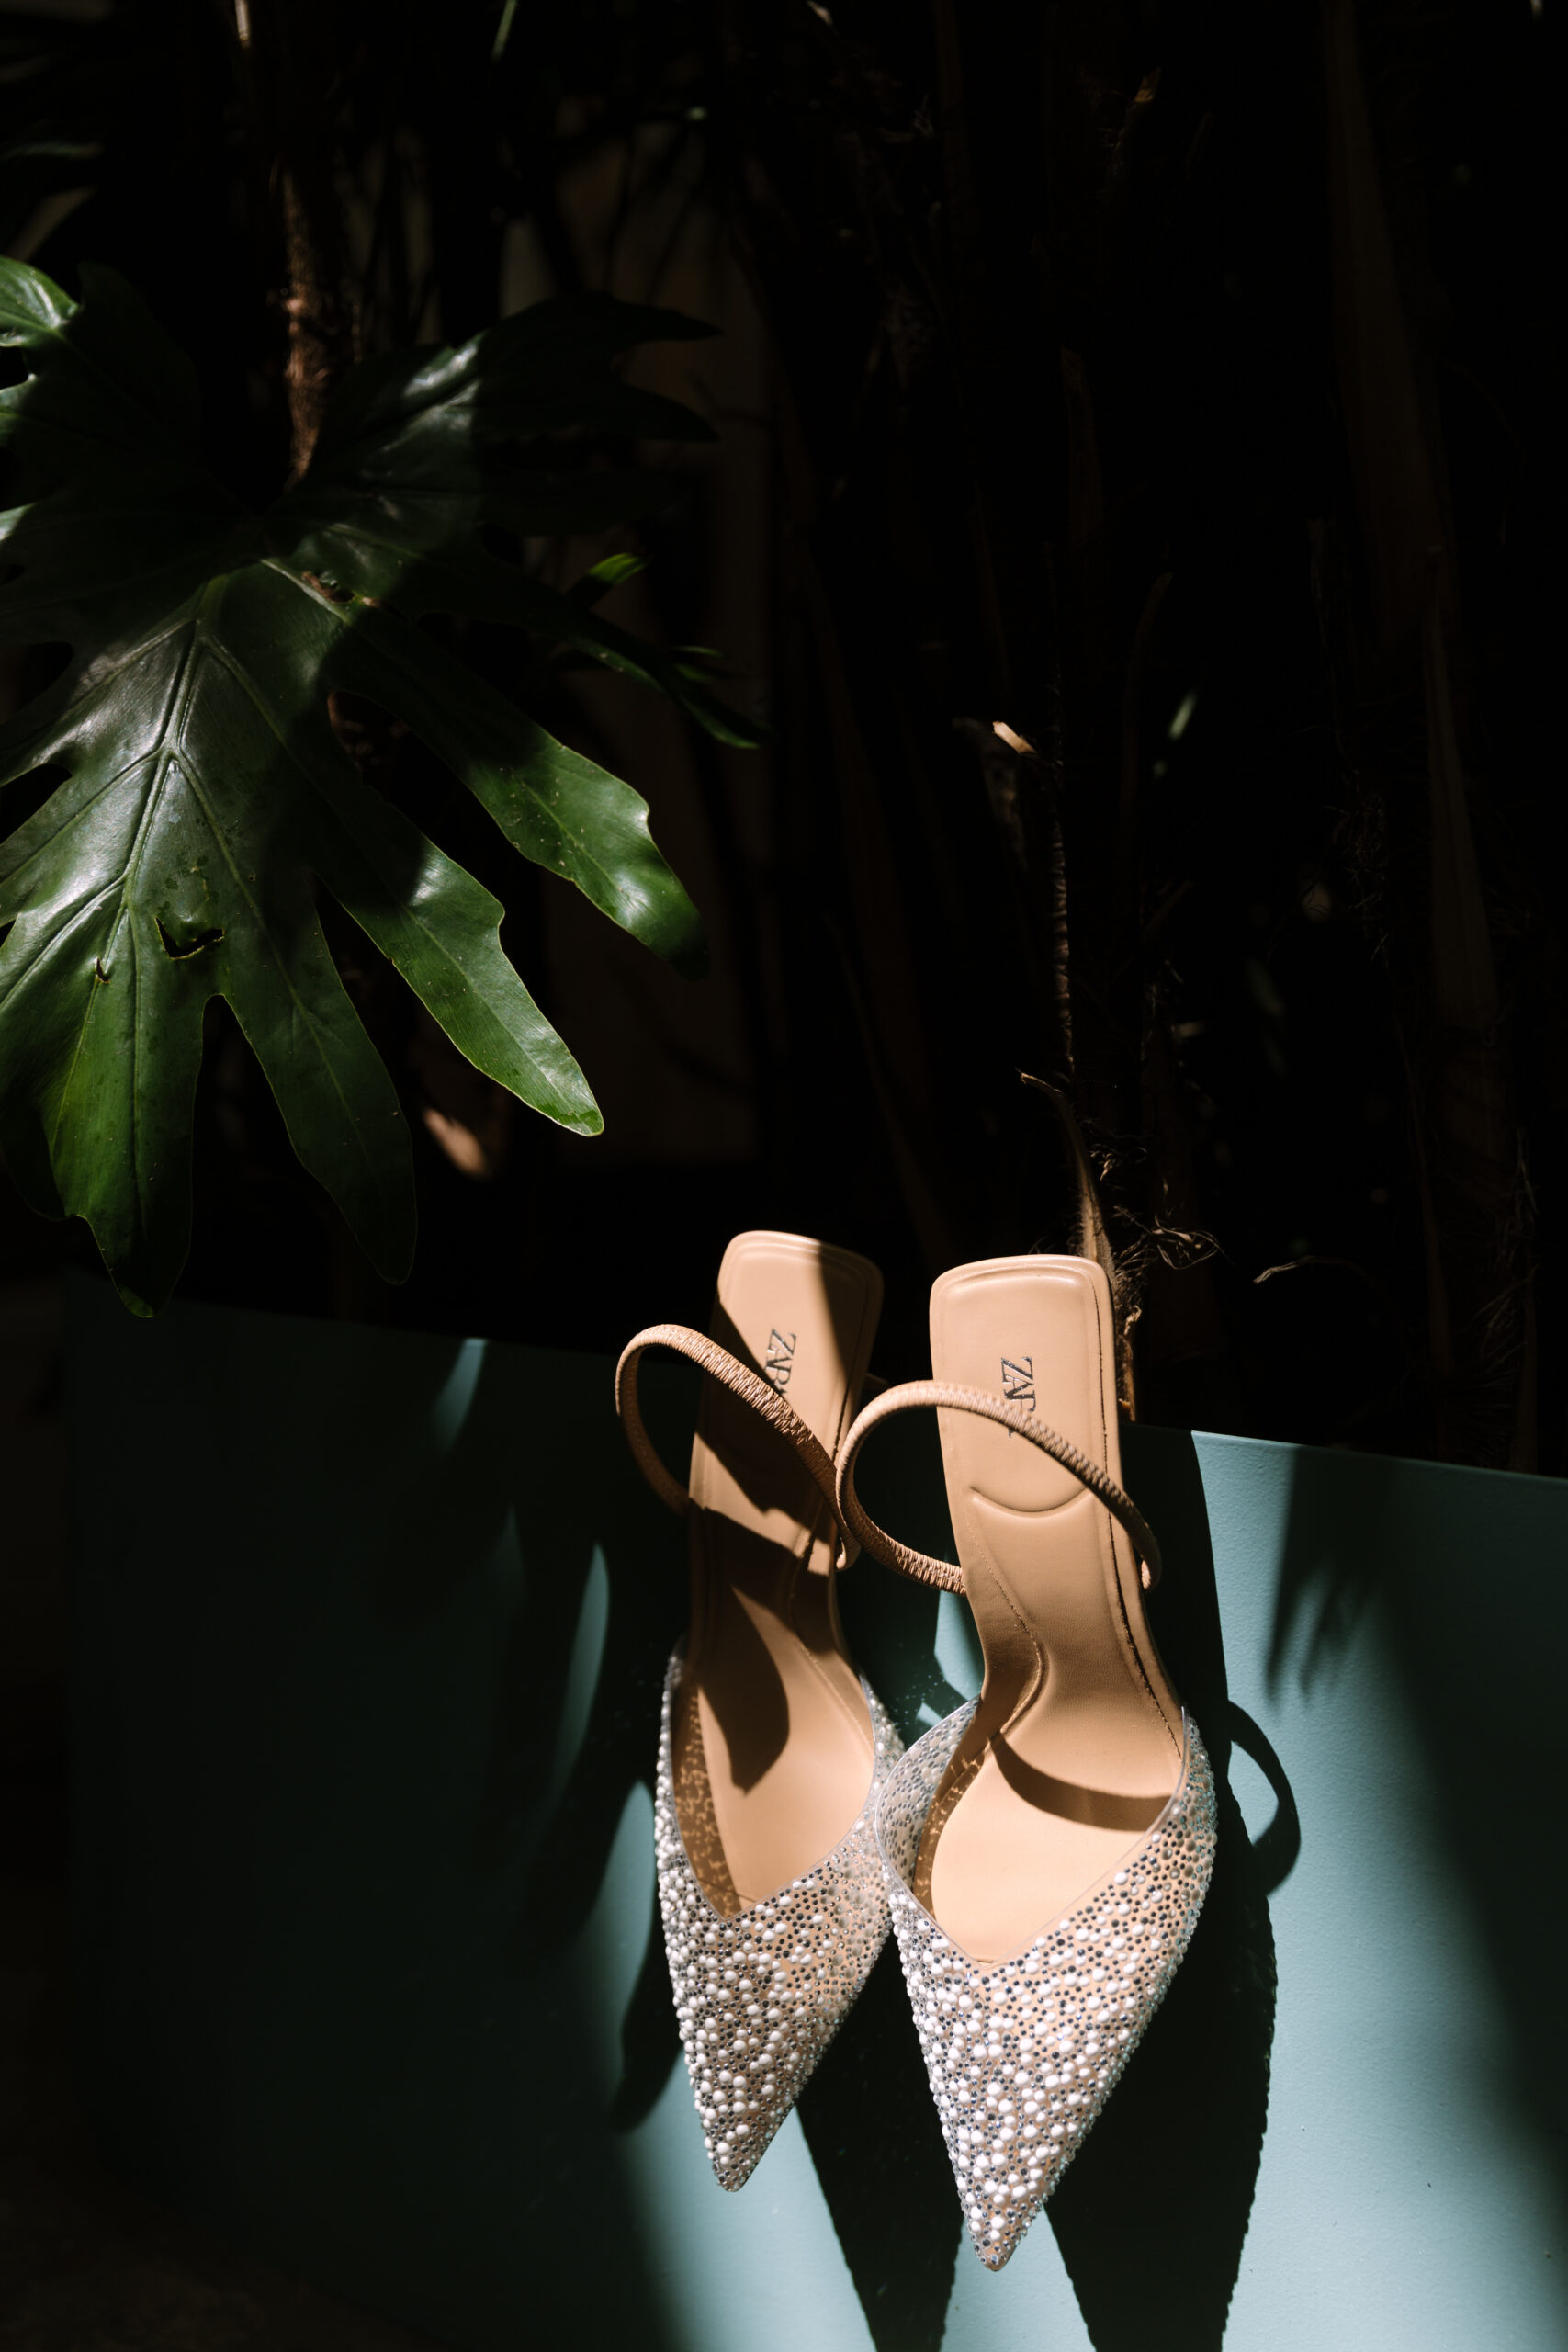 Zara pearl heeled slingbacks hung on turquoise wall under shadow of monstera leaf